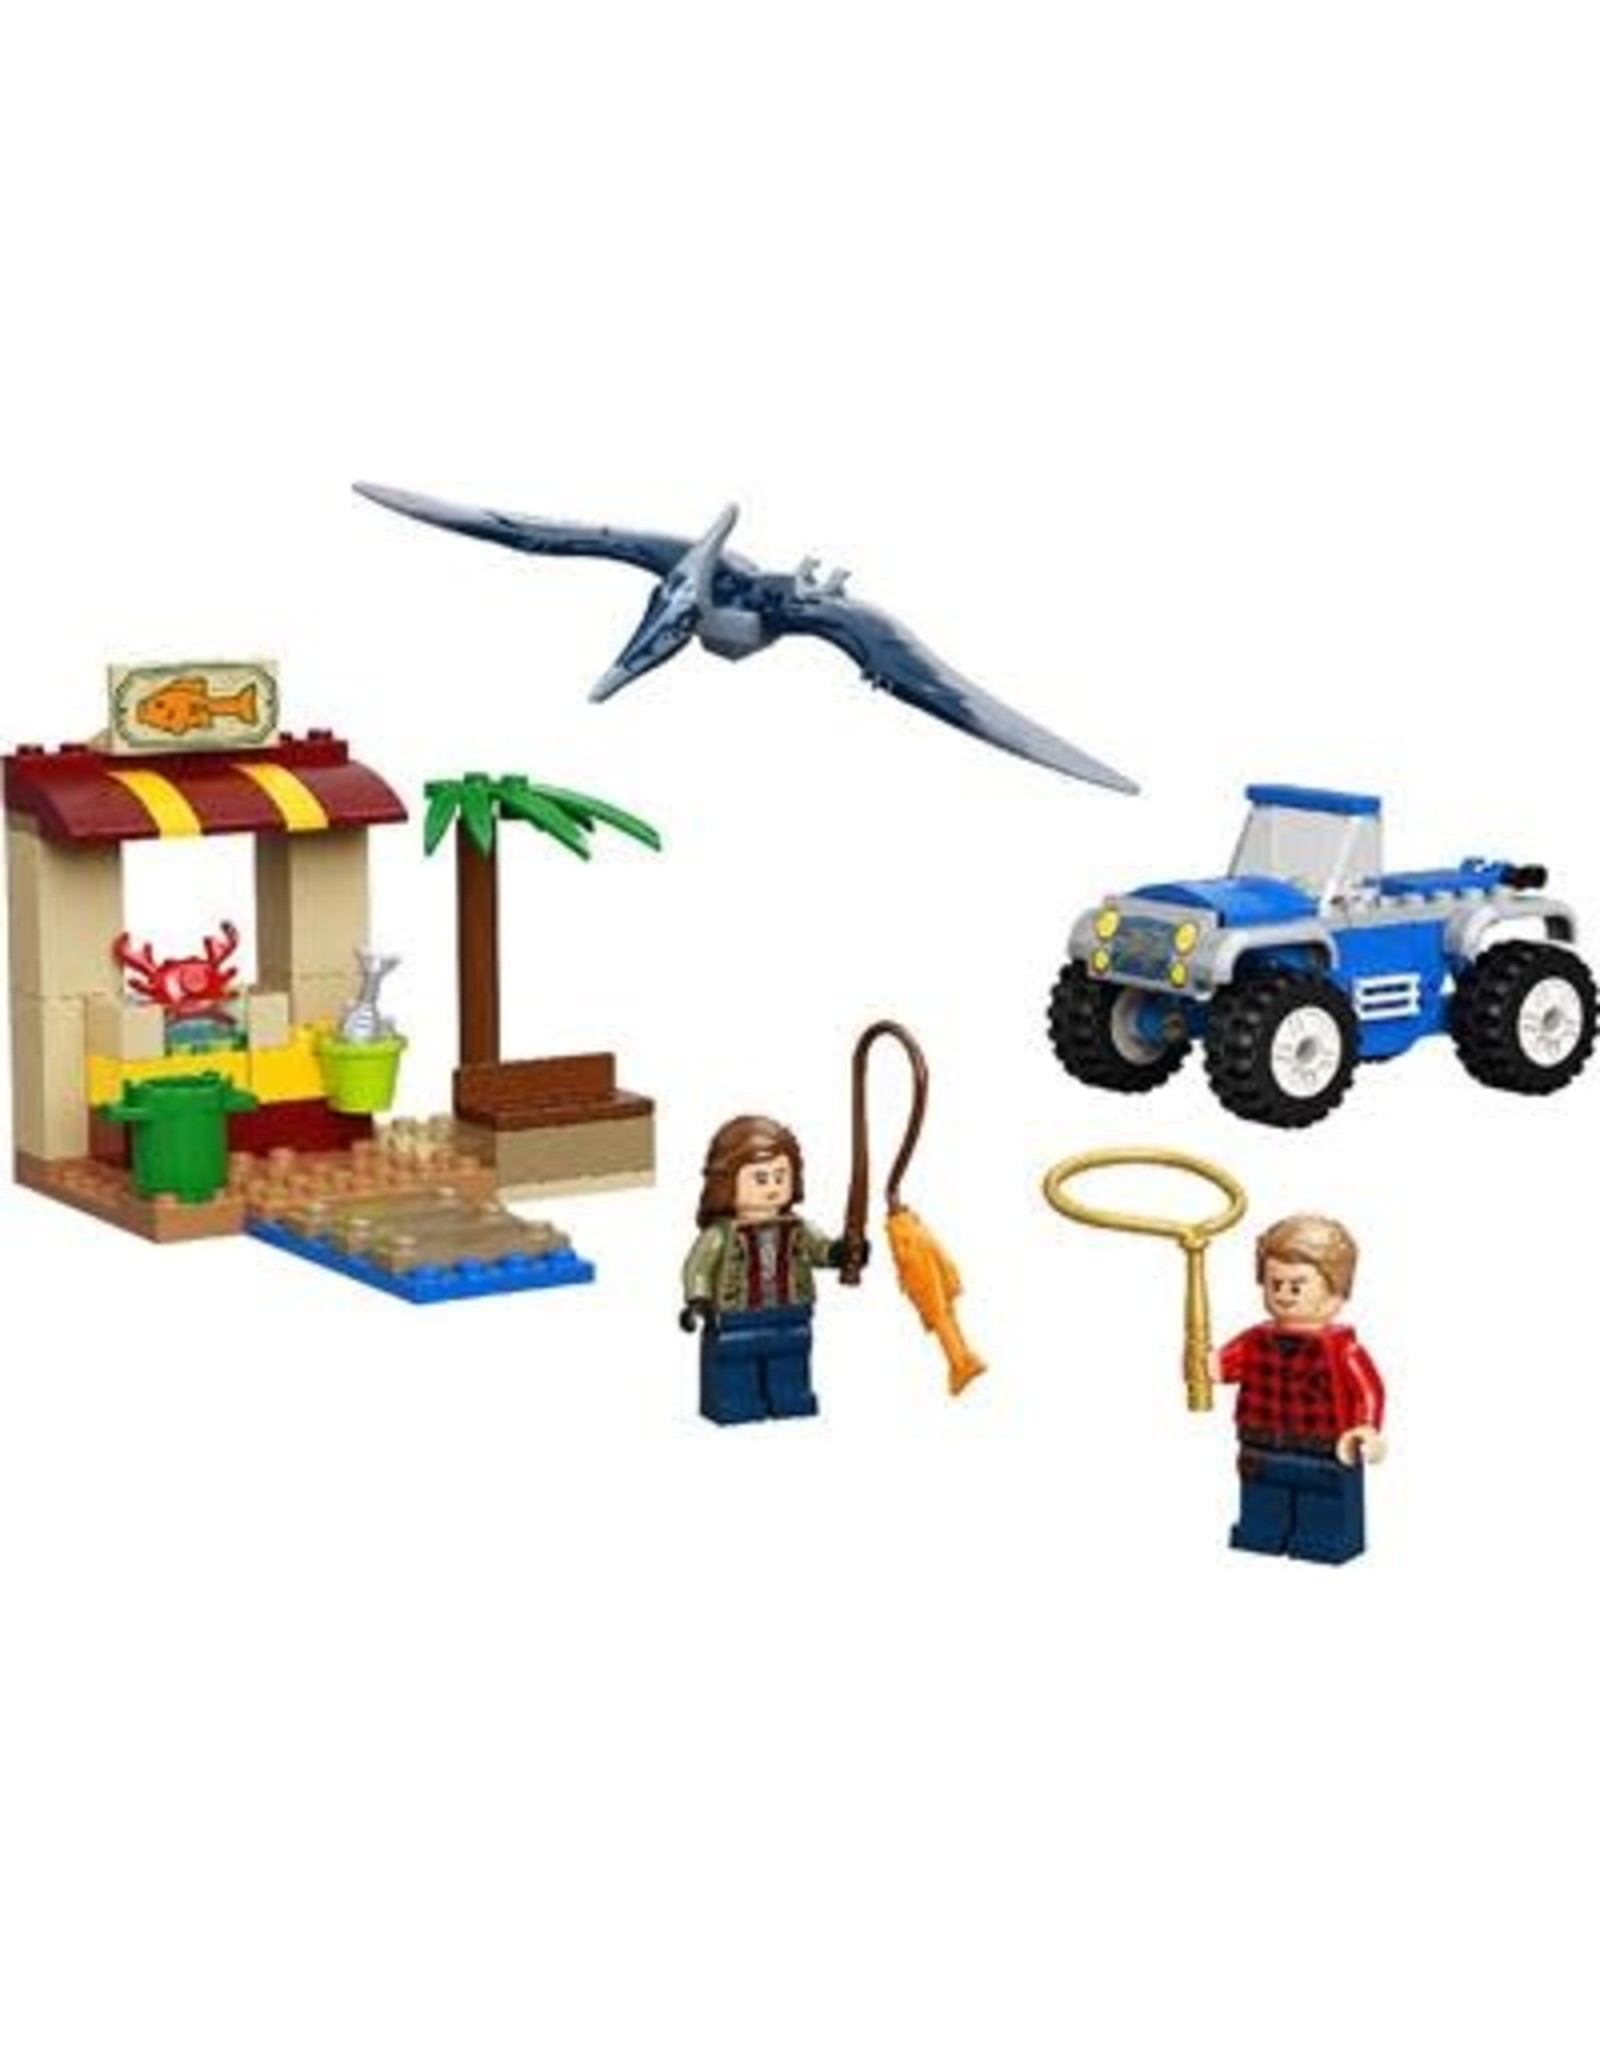 LEGO Lego Jurassic World 76943 Achtervolging van Pteranodon